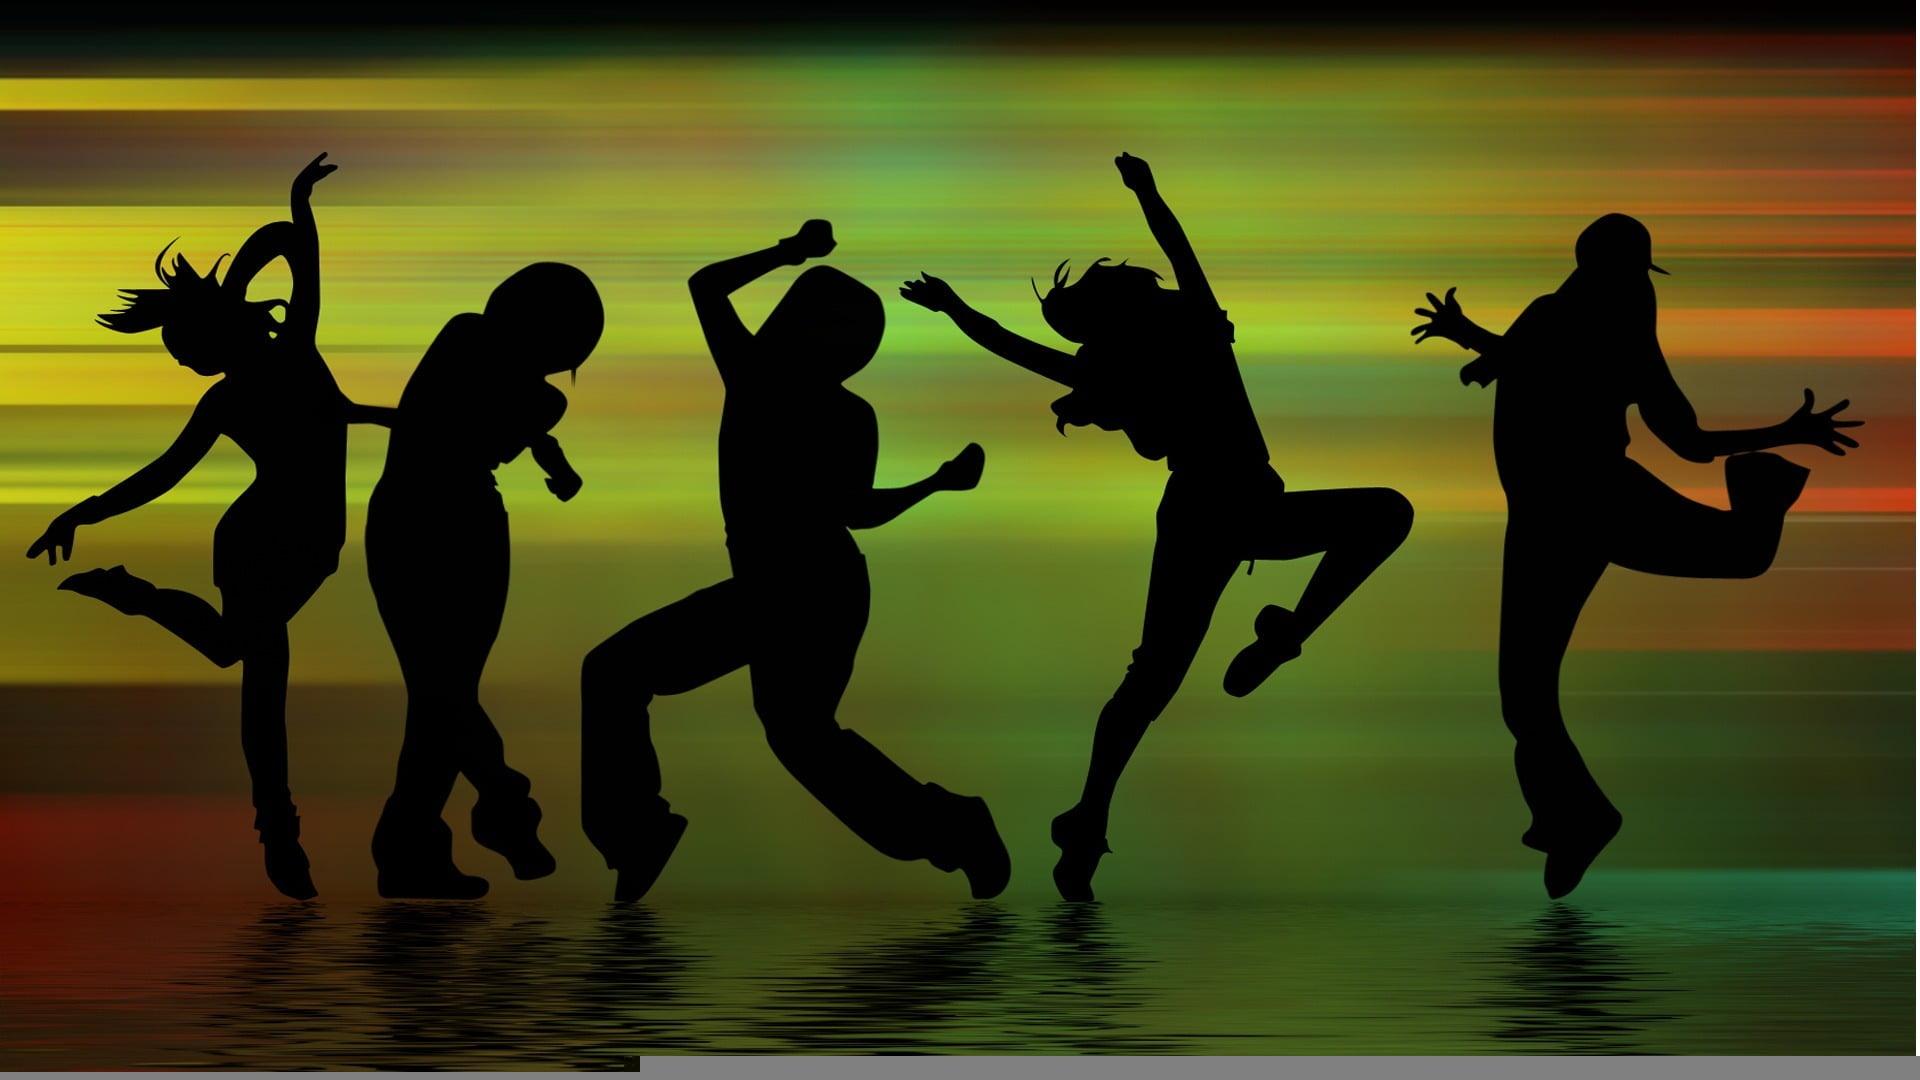 HD wallpaper: silhouette of five women dancing wallpaper, music